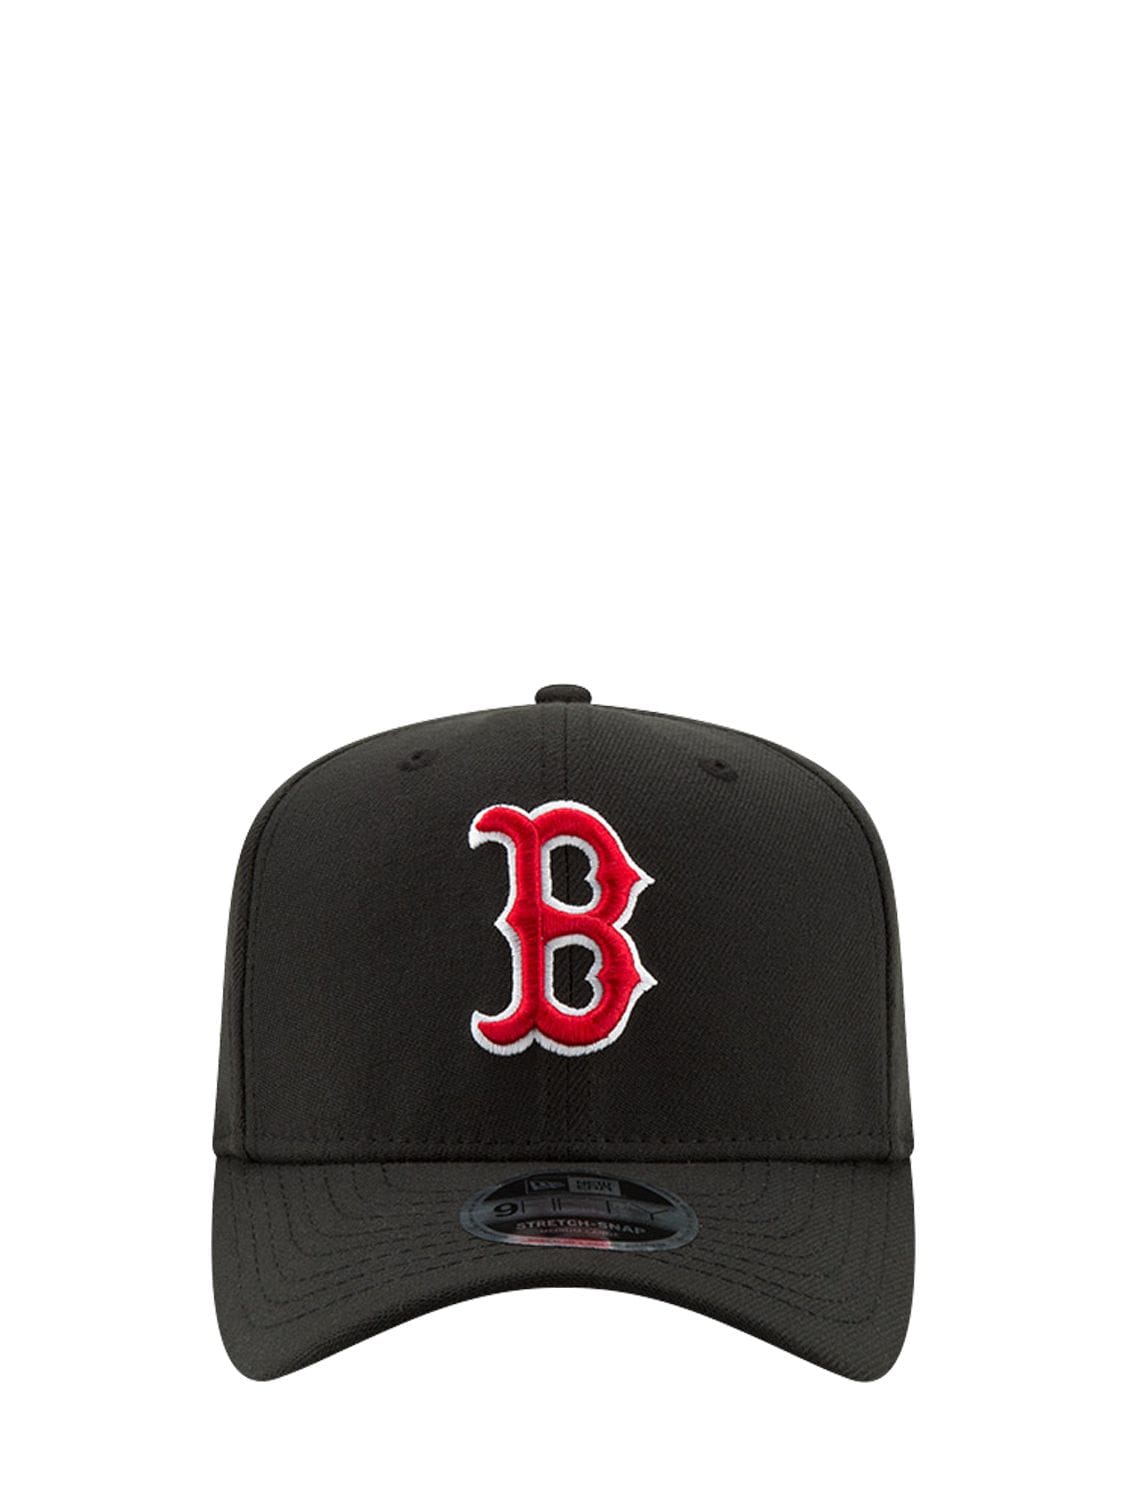 New Era 9fifty Boston Red Sox帽子 In Black